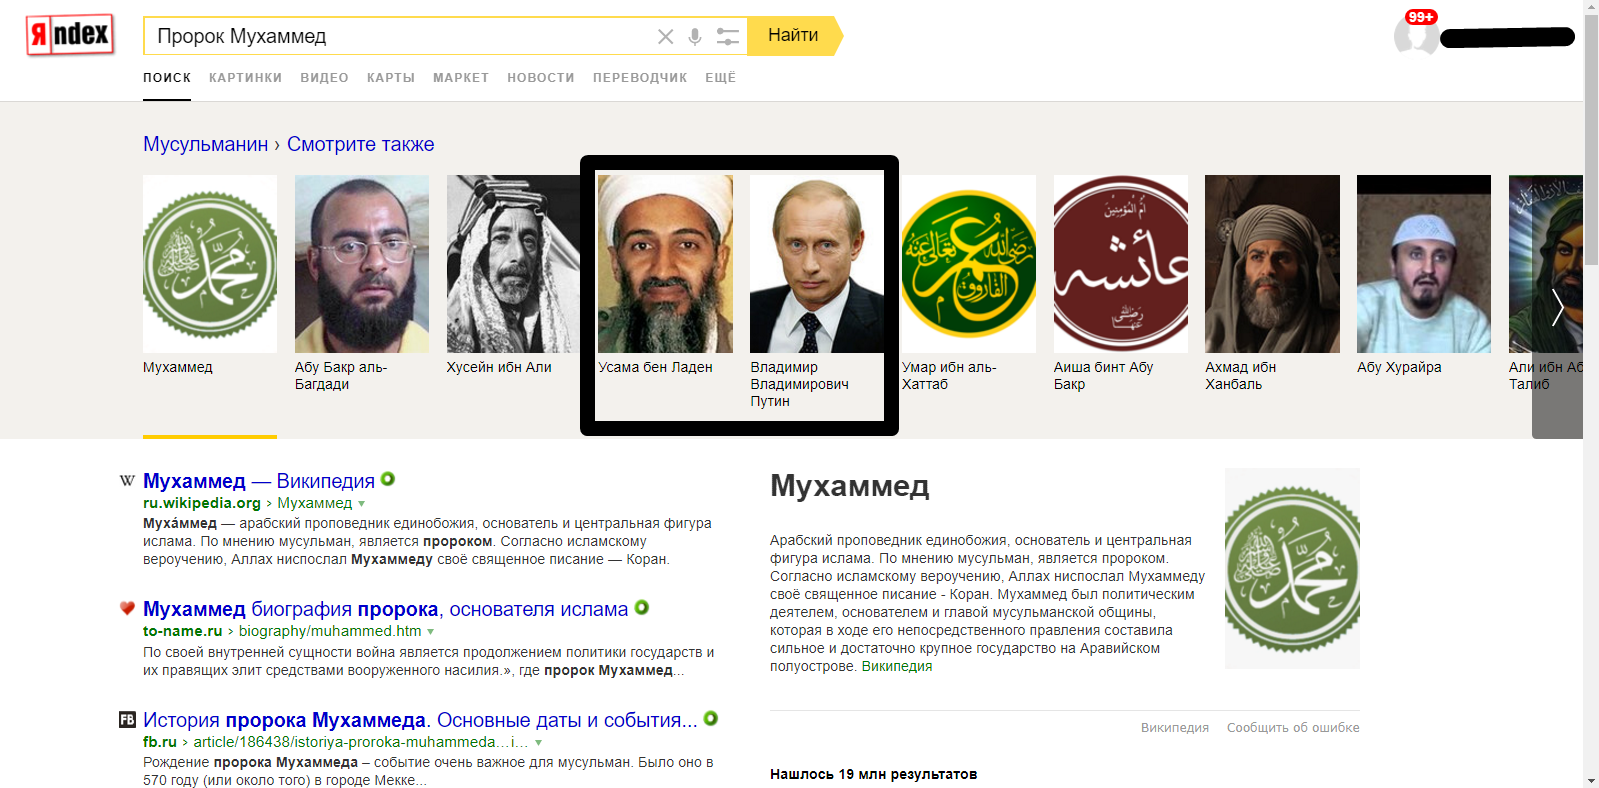 Yandex recognized Putin as a terrorist - Politics, Vladimir Putin, Osama bin Laden, Террористы